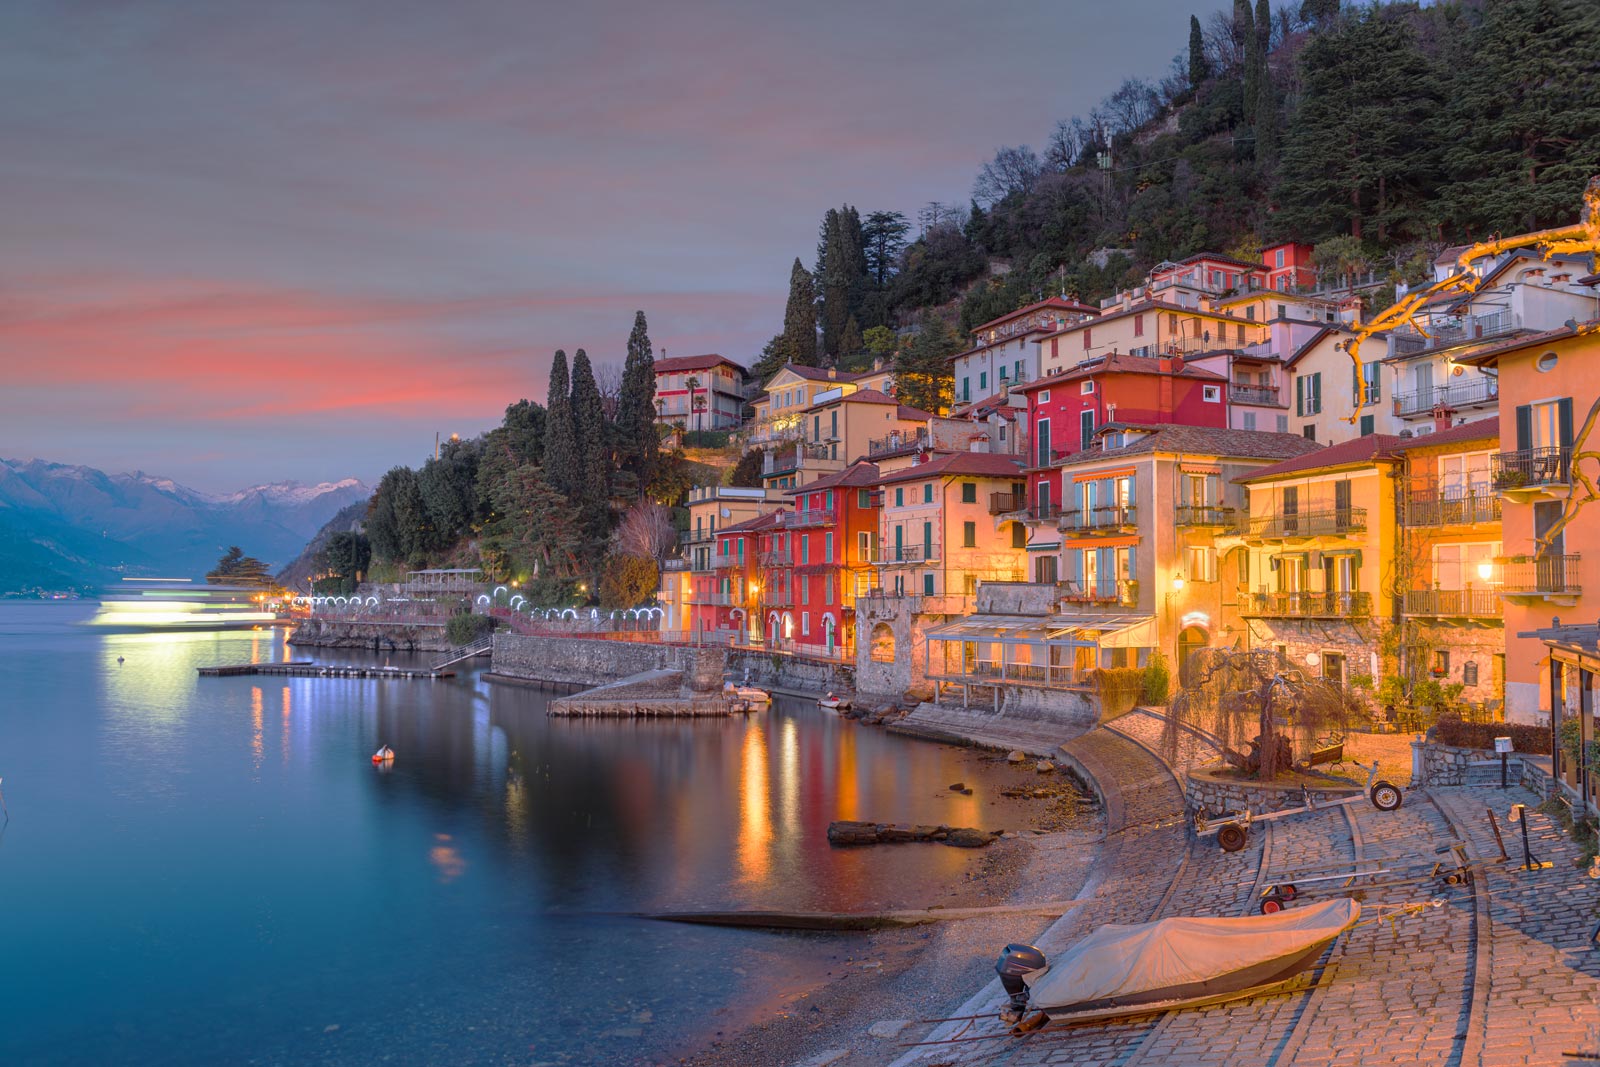 Beautiful town along Amalfi coastline is shown while comparing the coastal belt with Lake Como